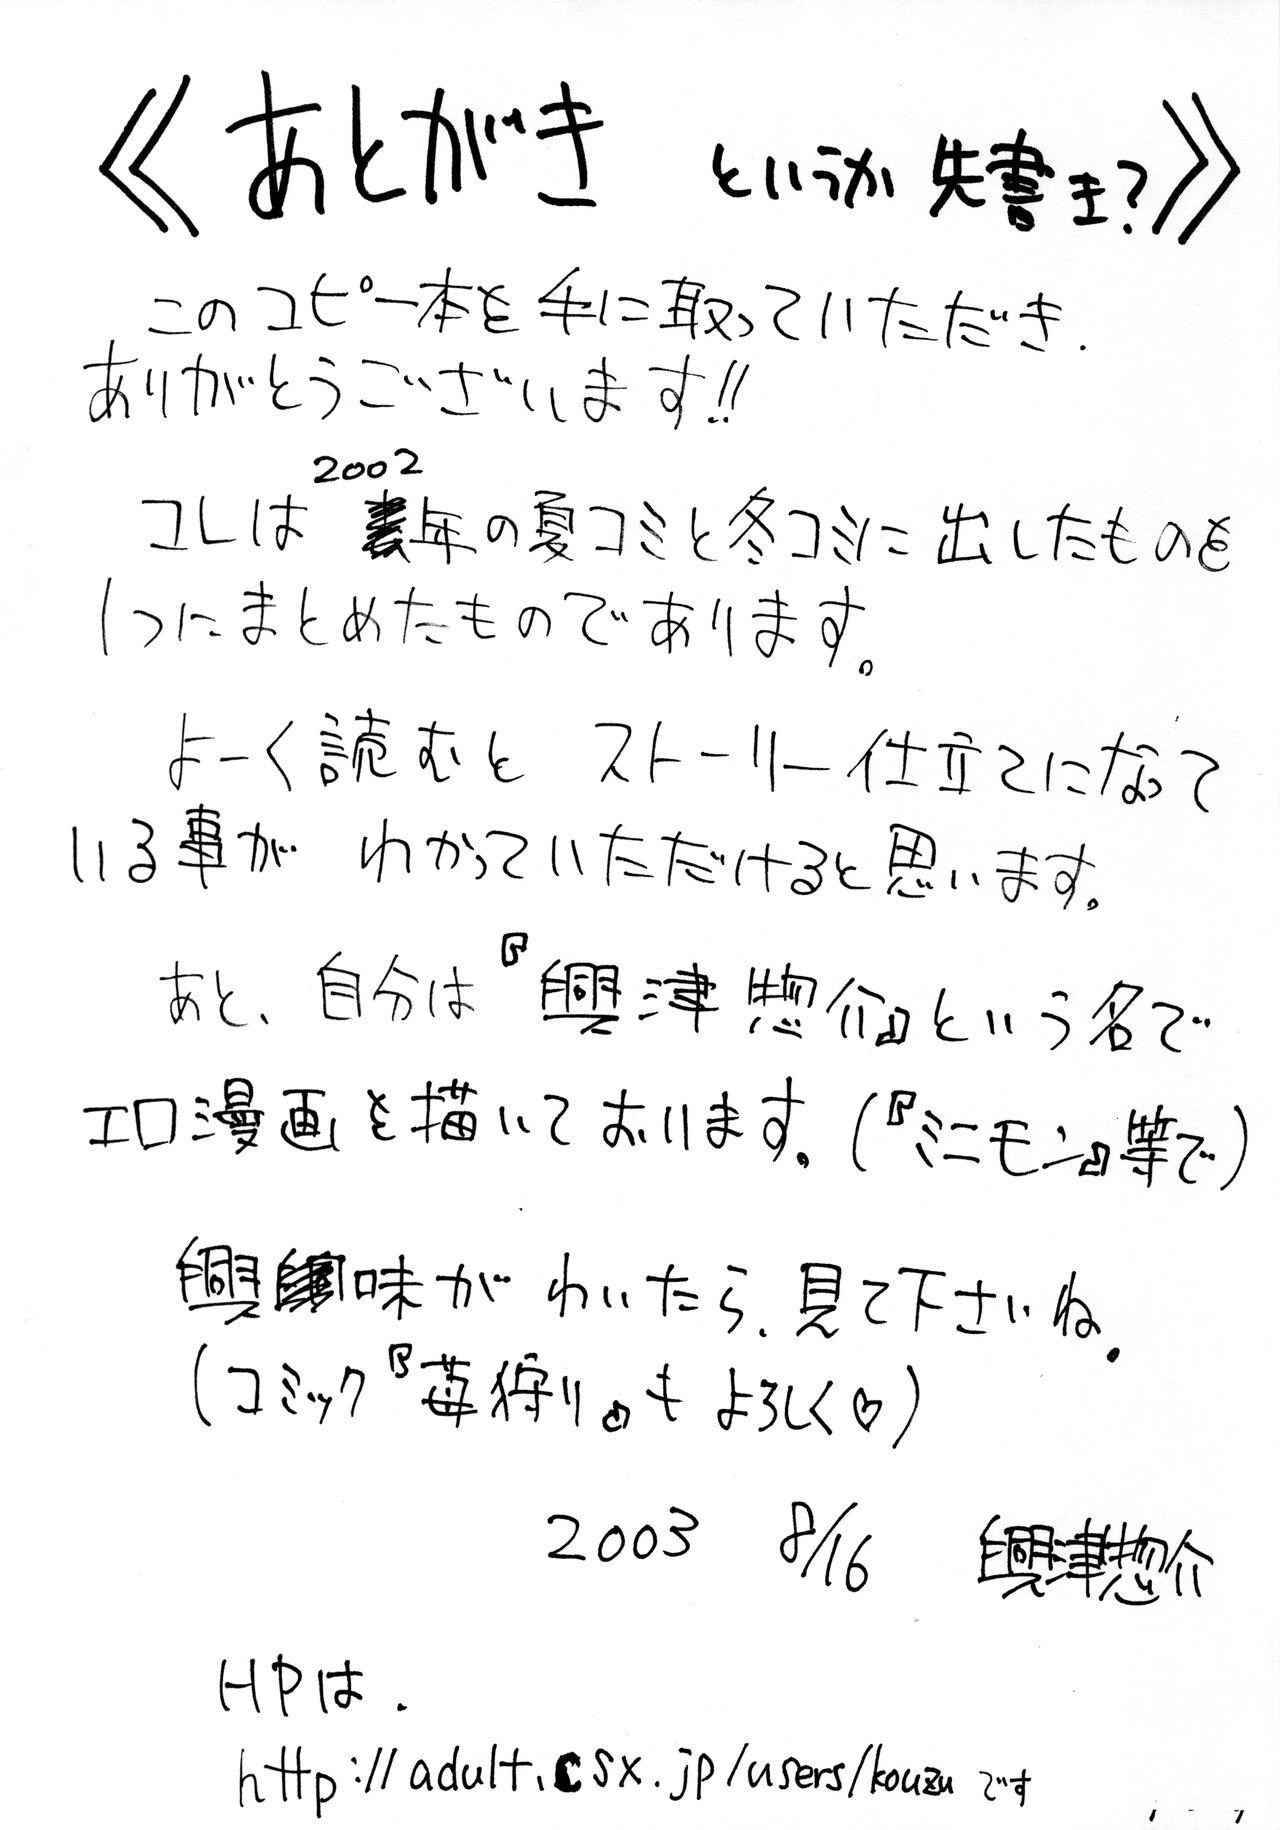 Publico Shutter Chance de arimasu - Kasumin Princess tutu Candid - Page 2